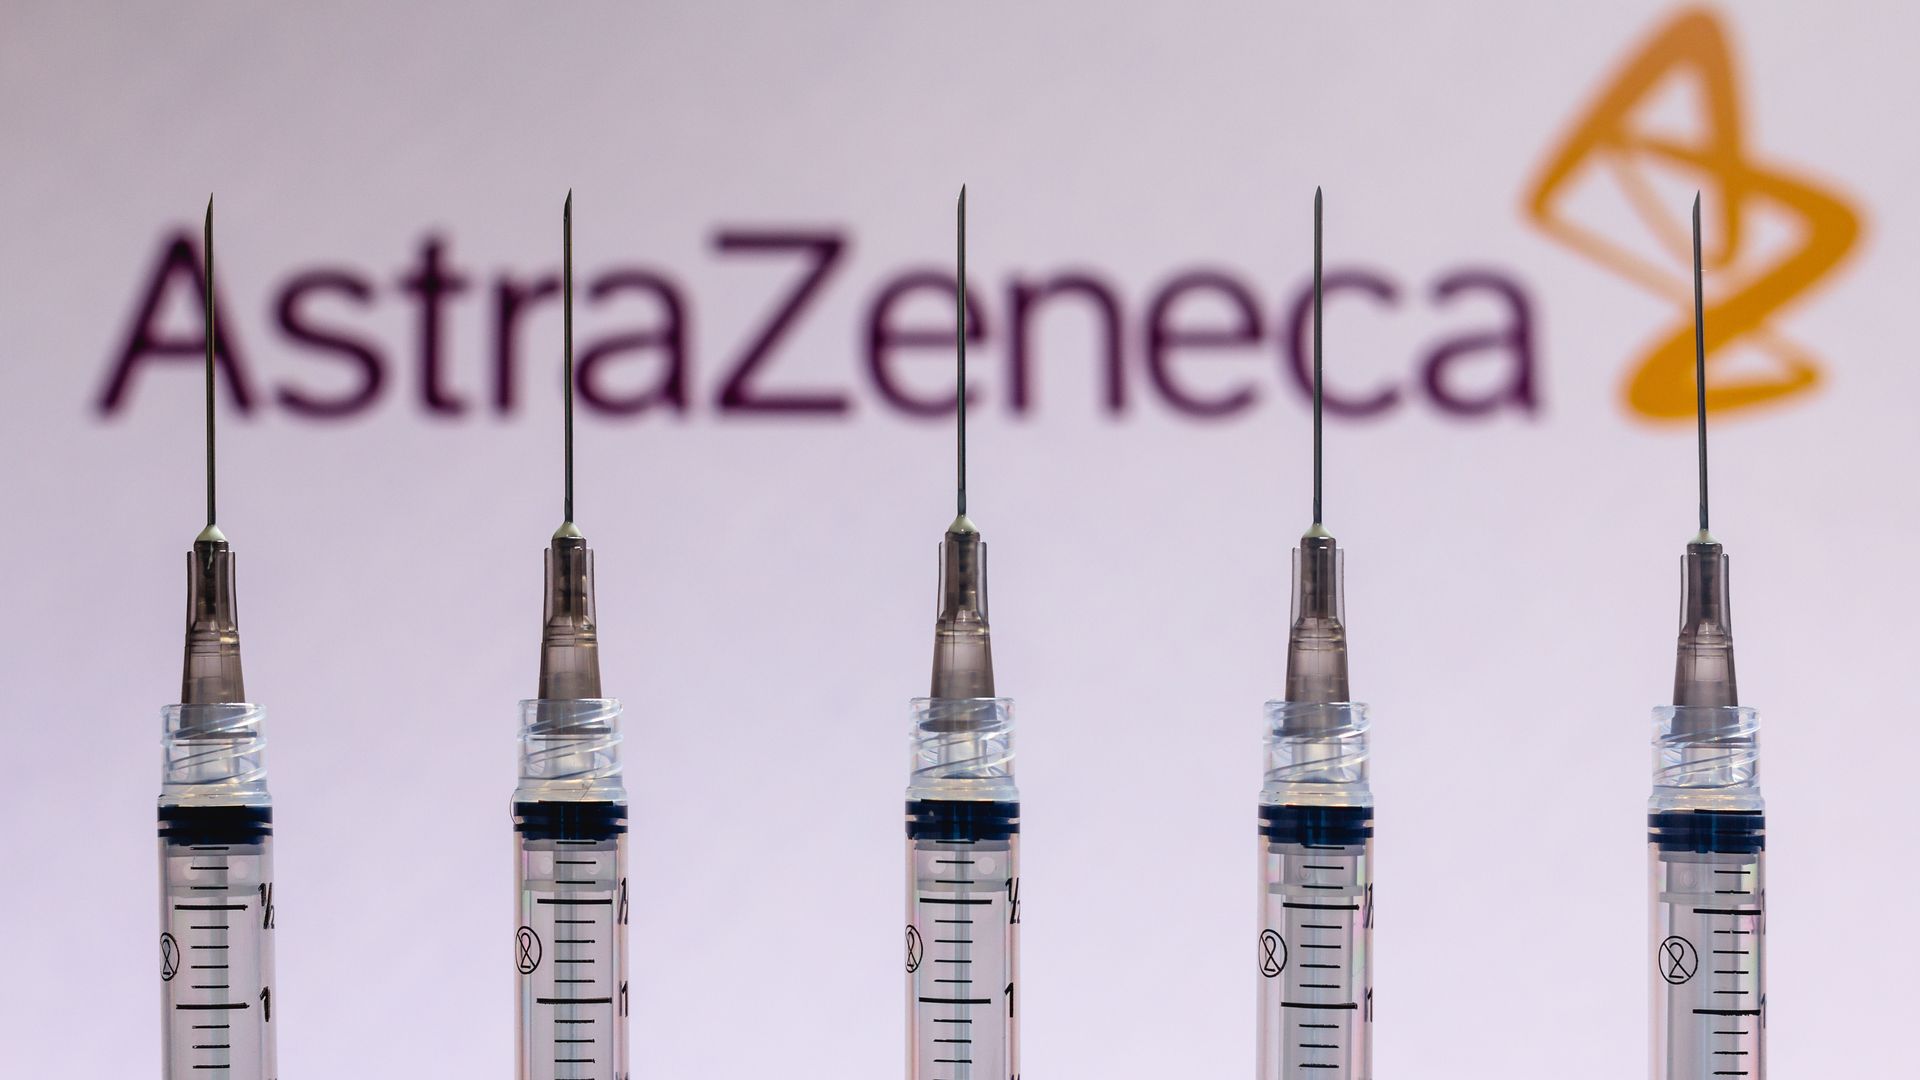 The AstraZeneca logo seen behind several syringes 